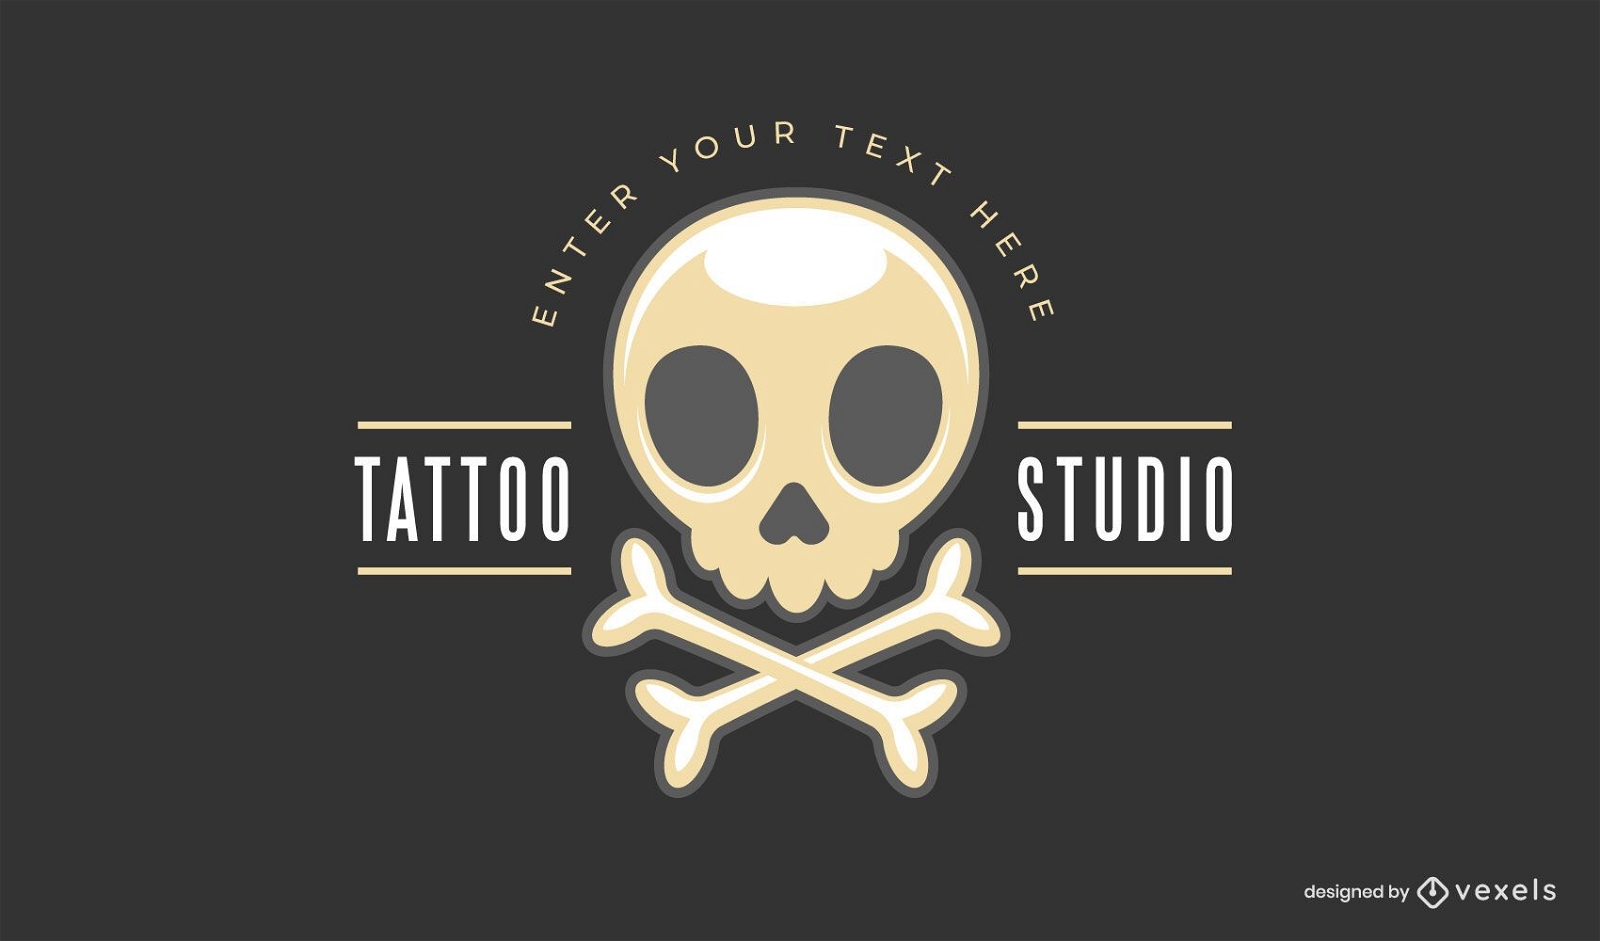 100000 Tattoo logo Vector Images  Depositphotos